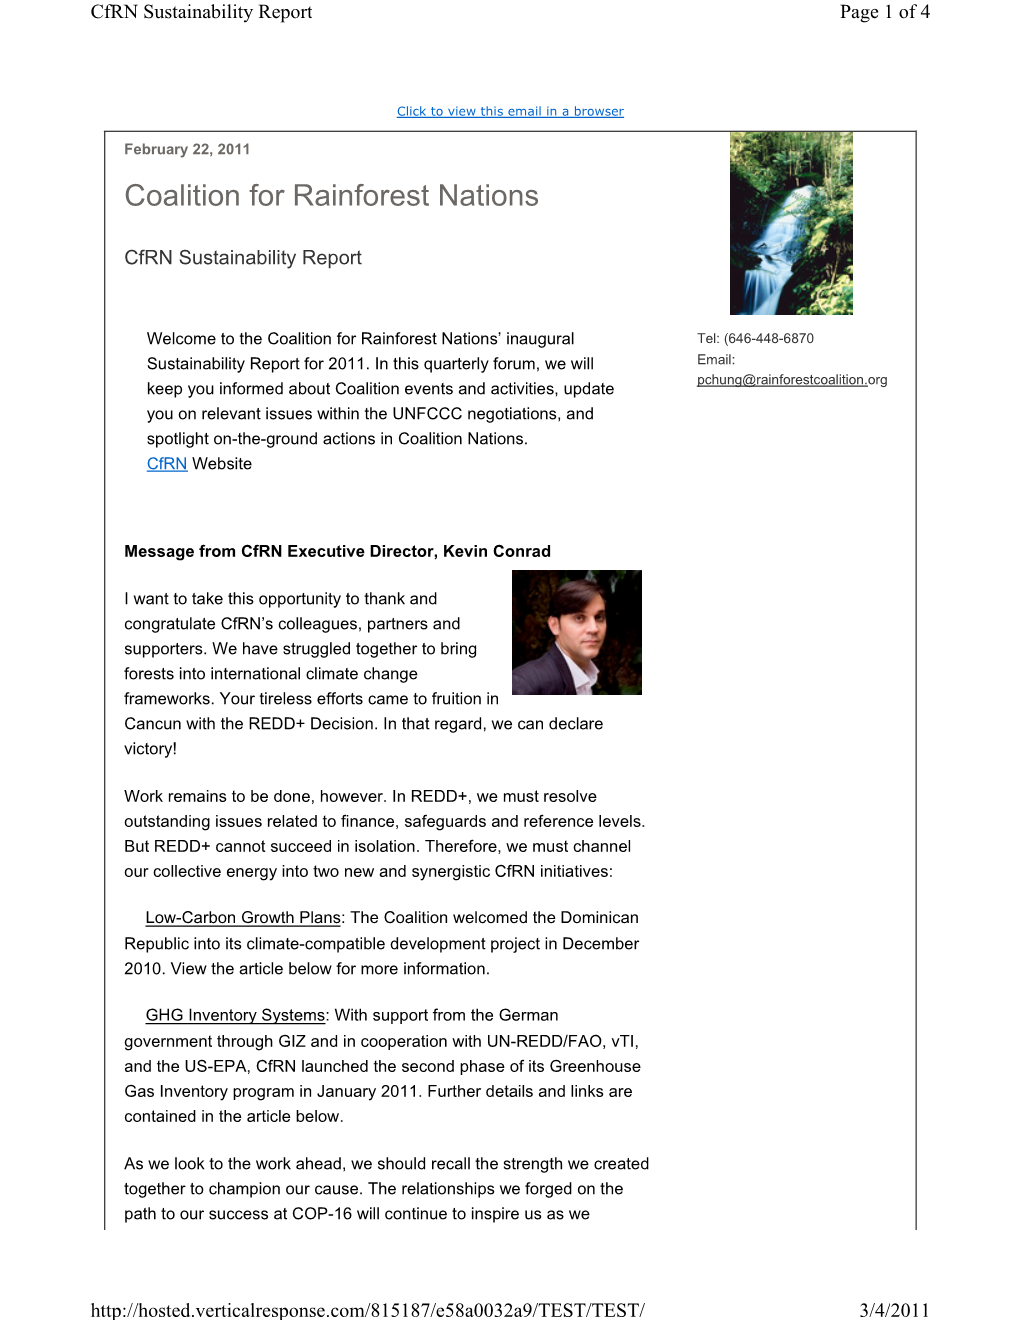 Coalition for Rainforest Nations